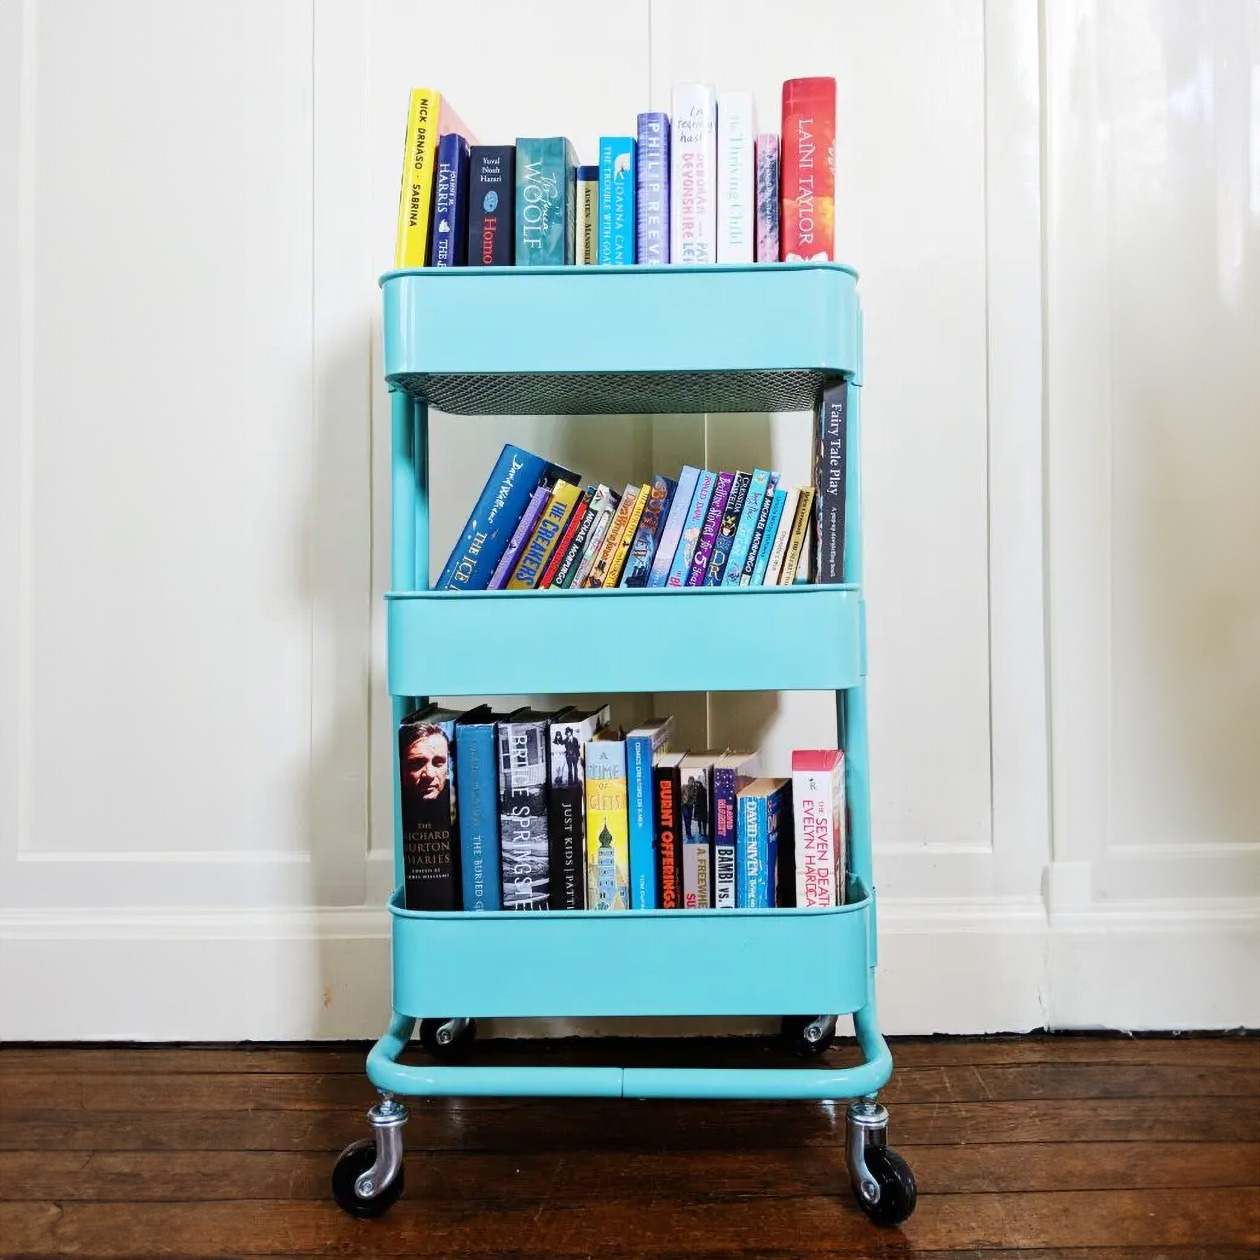 Яркая тележка с книгами — сама по себе декоративный элемент. Фото: The Book Family Rogerson / Pinterest